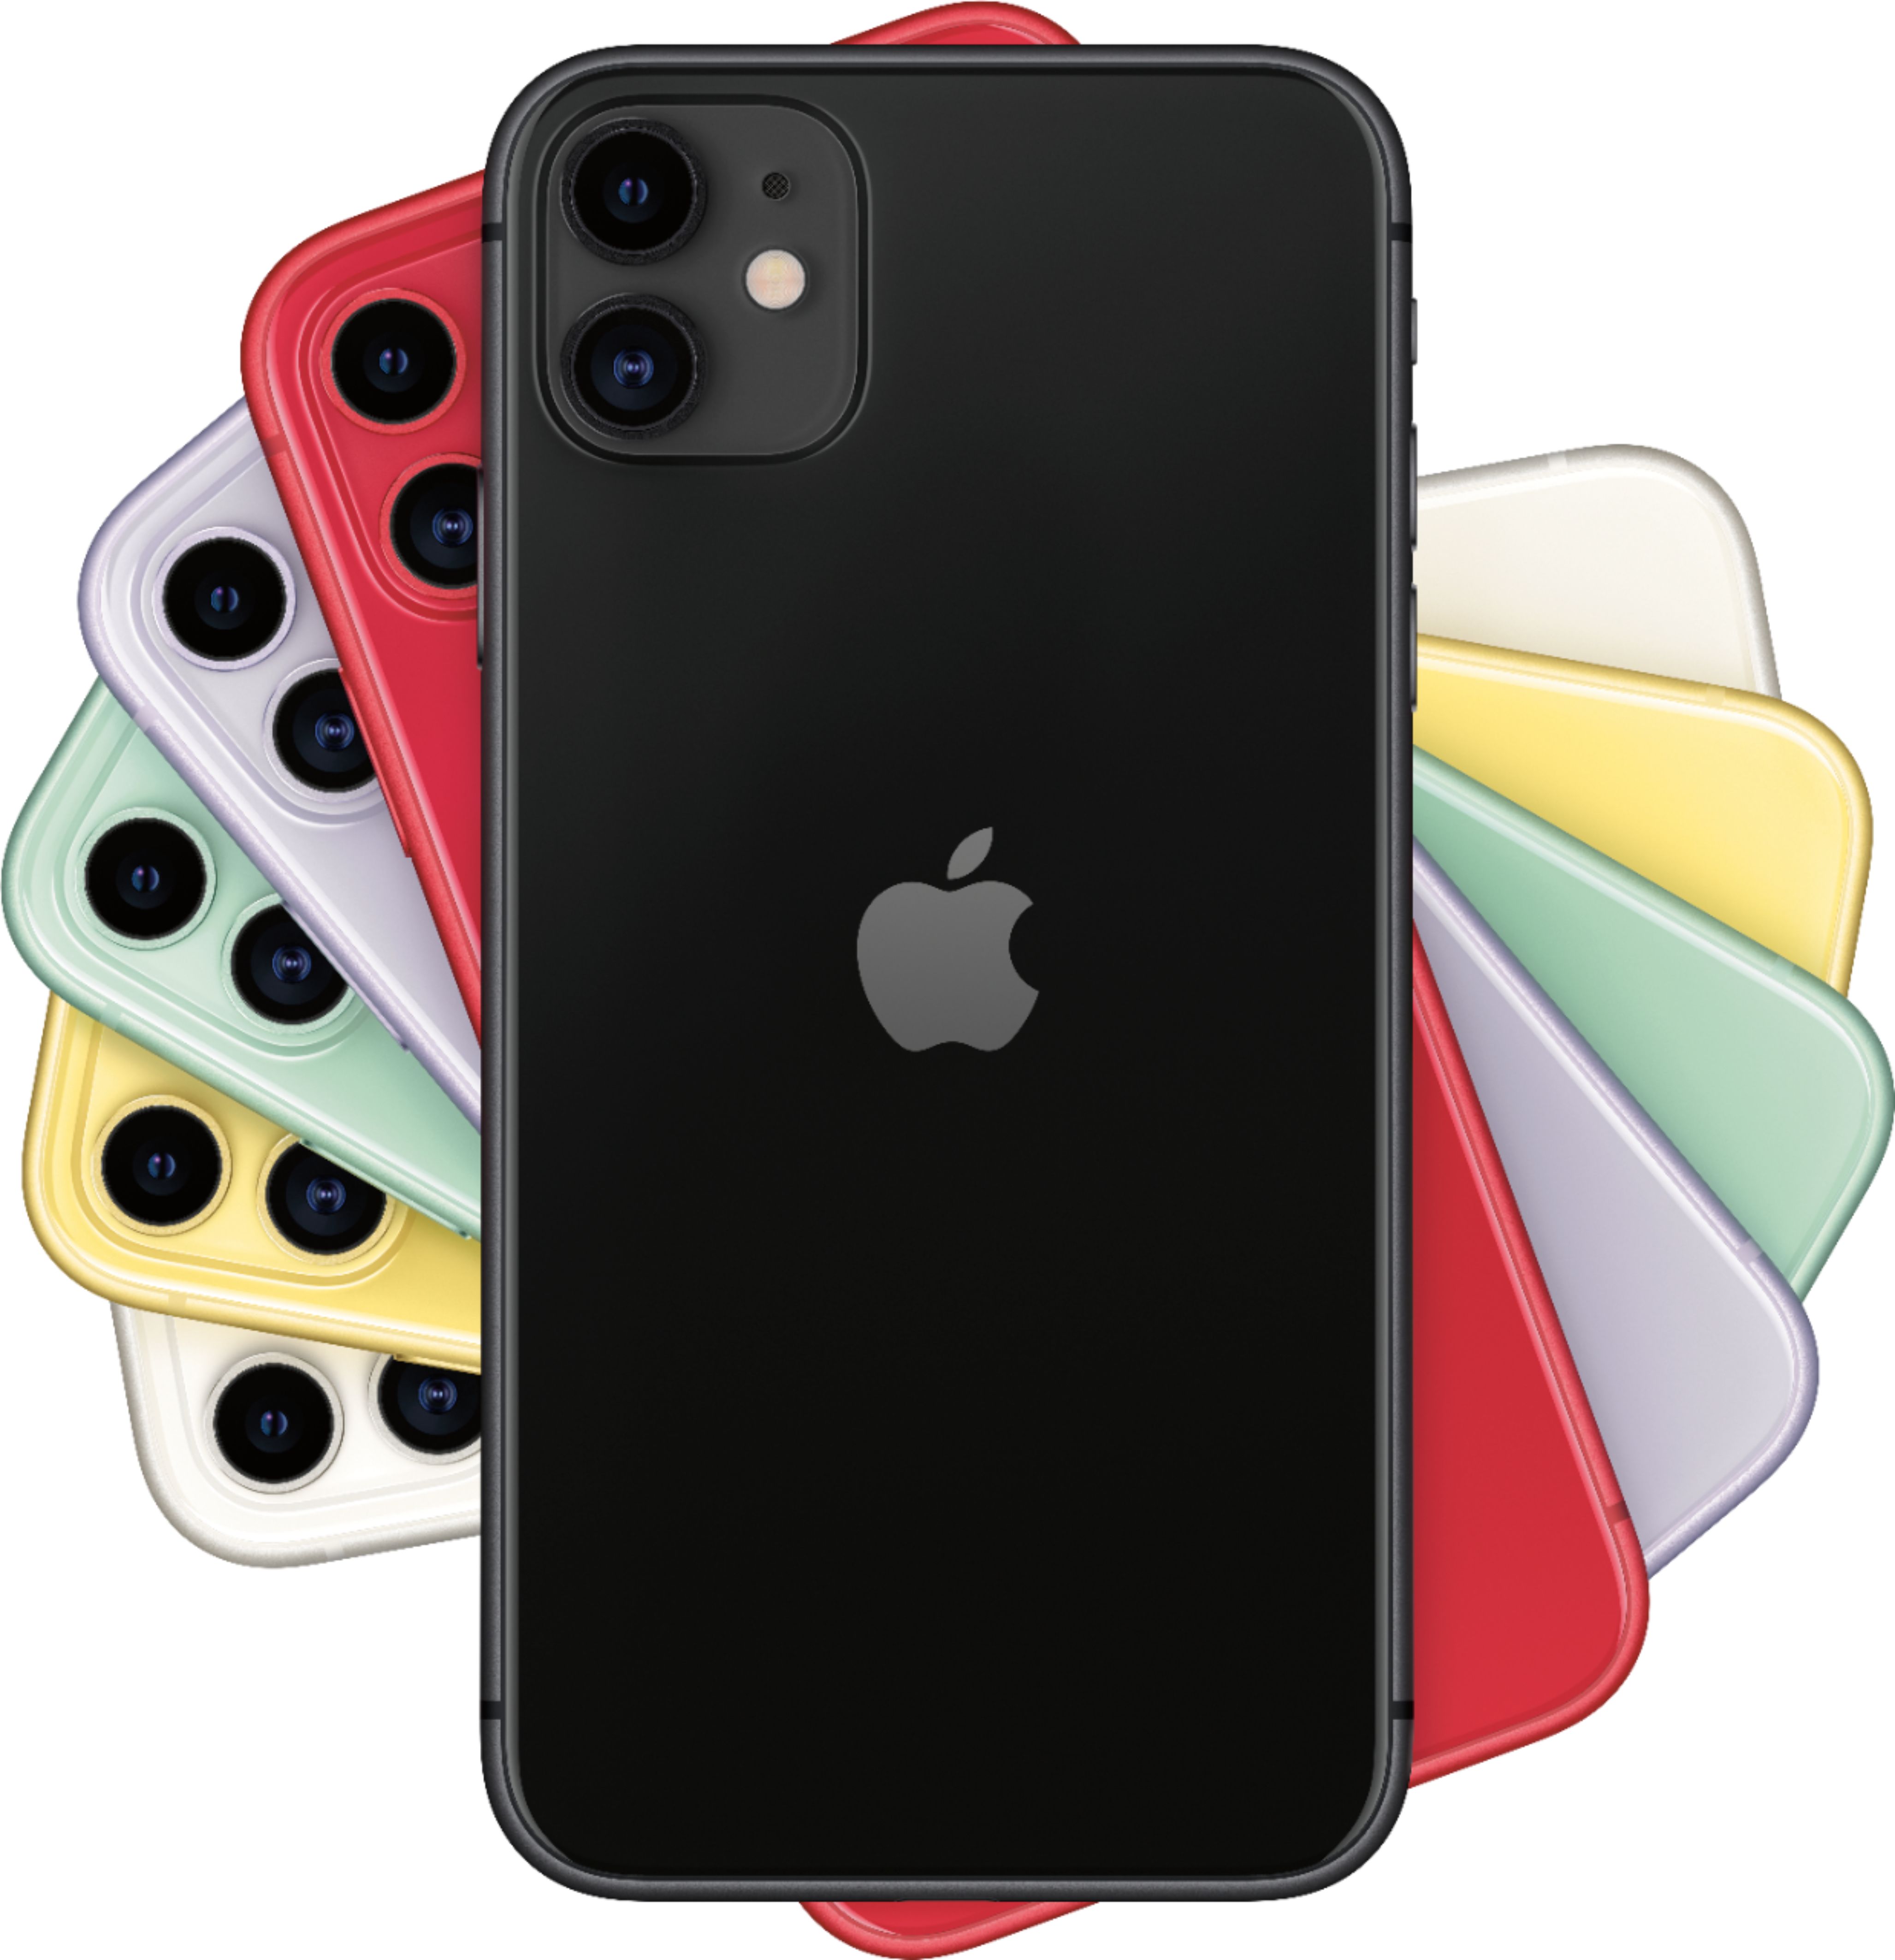 Best Buy Apple Iphone 11 64gb Black At T Mwl72ll A